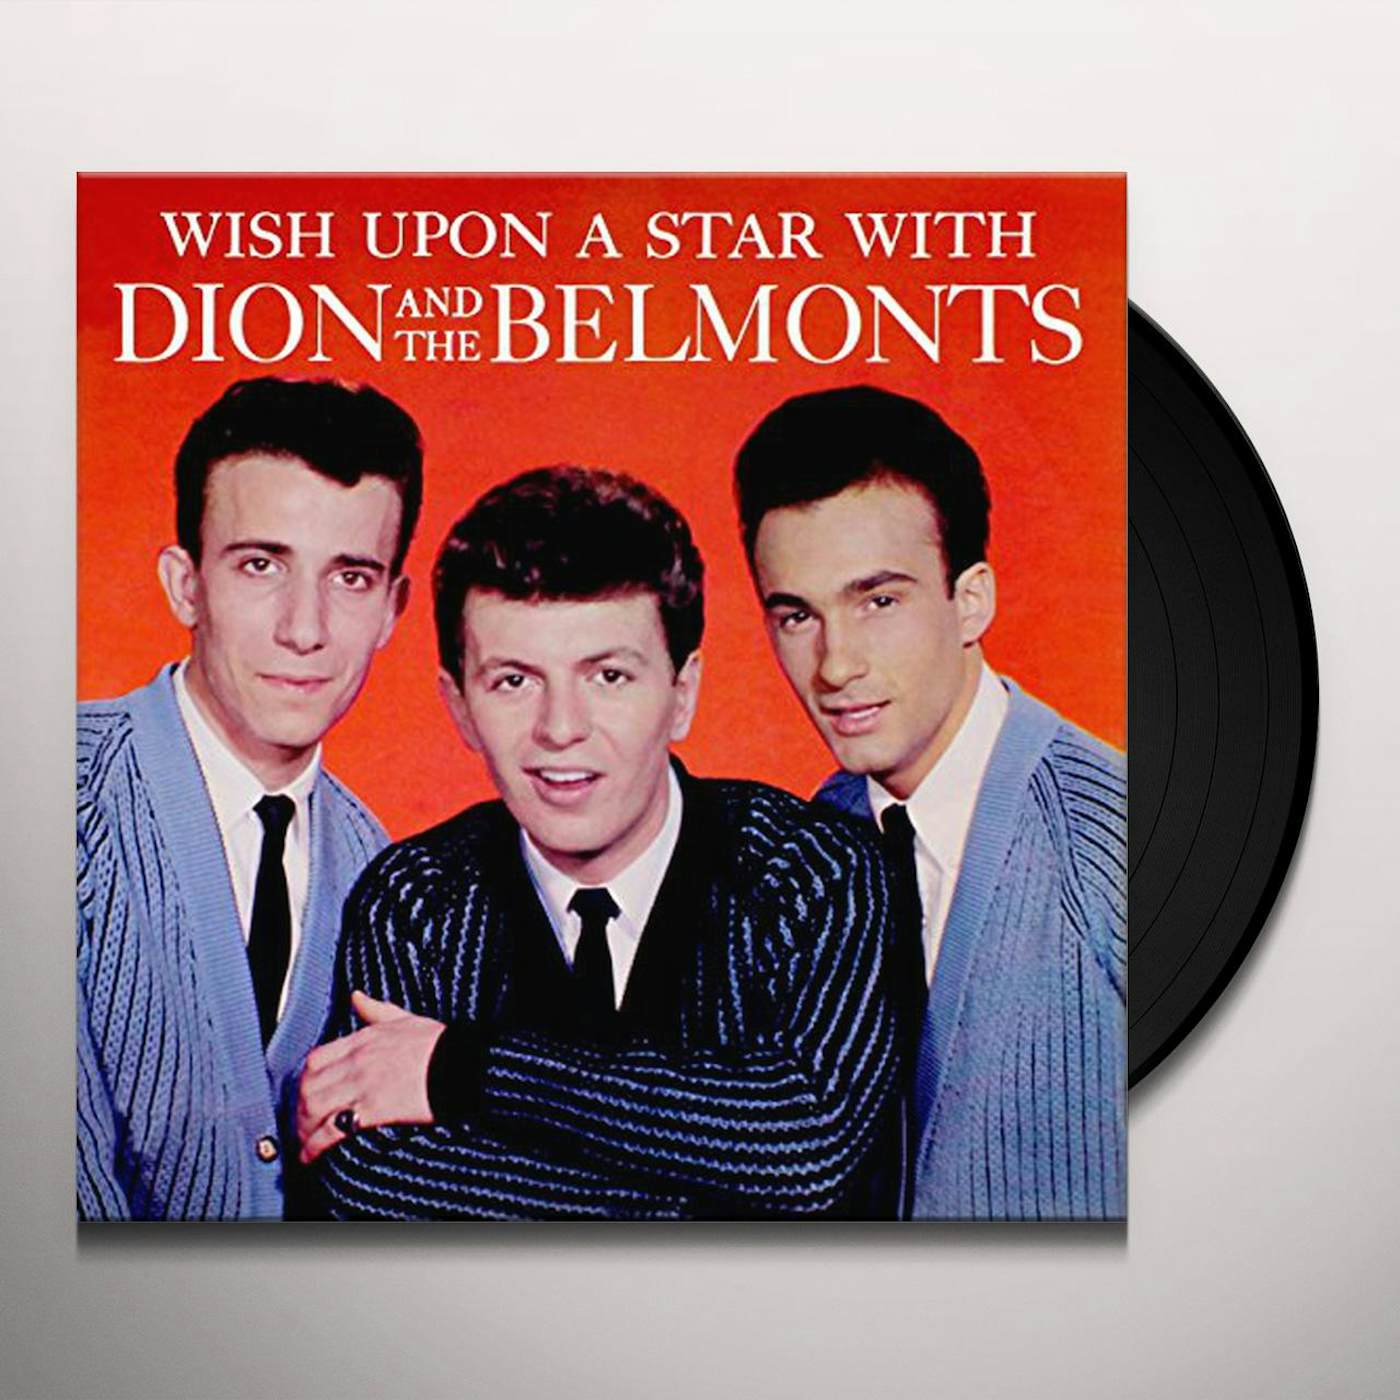 Dion & The Belmonts WISH UPON A STAR (BONUS TRACKS) Vinyl Record - 180 Gram Pressing, Remastered, Virgin Vinyl